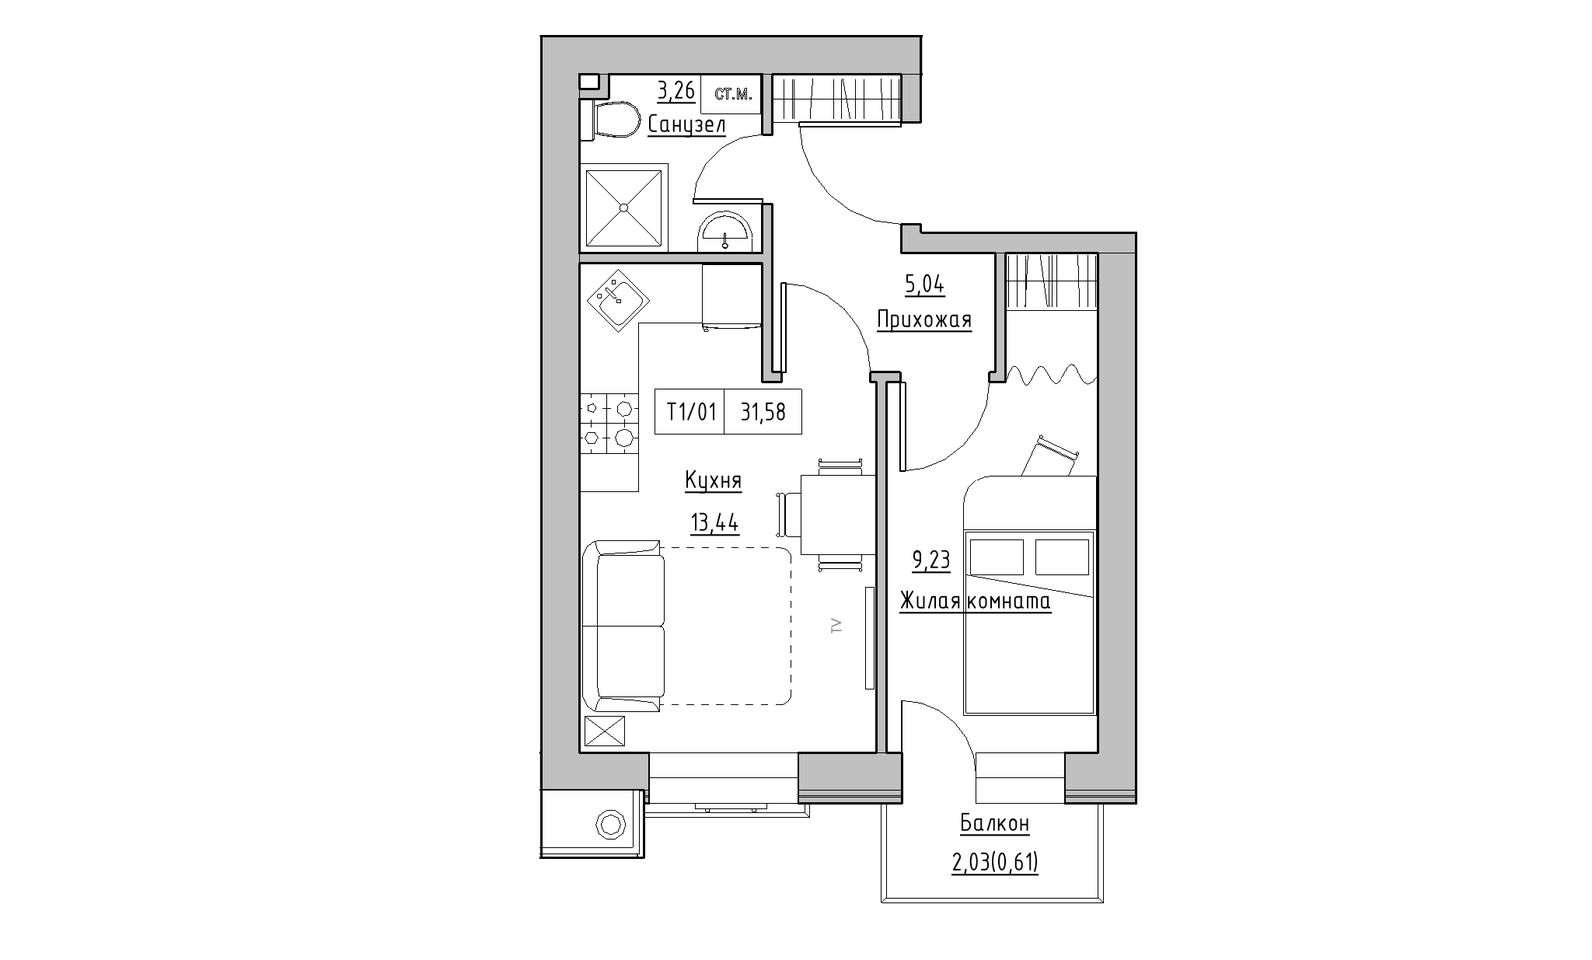 Planning 1-rm flats area 31.58m2, KS-014-05/0003.